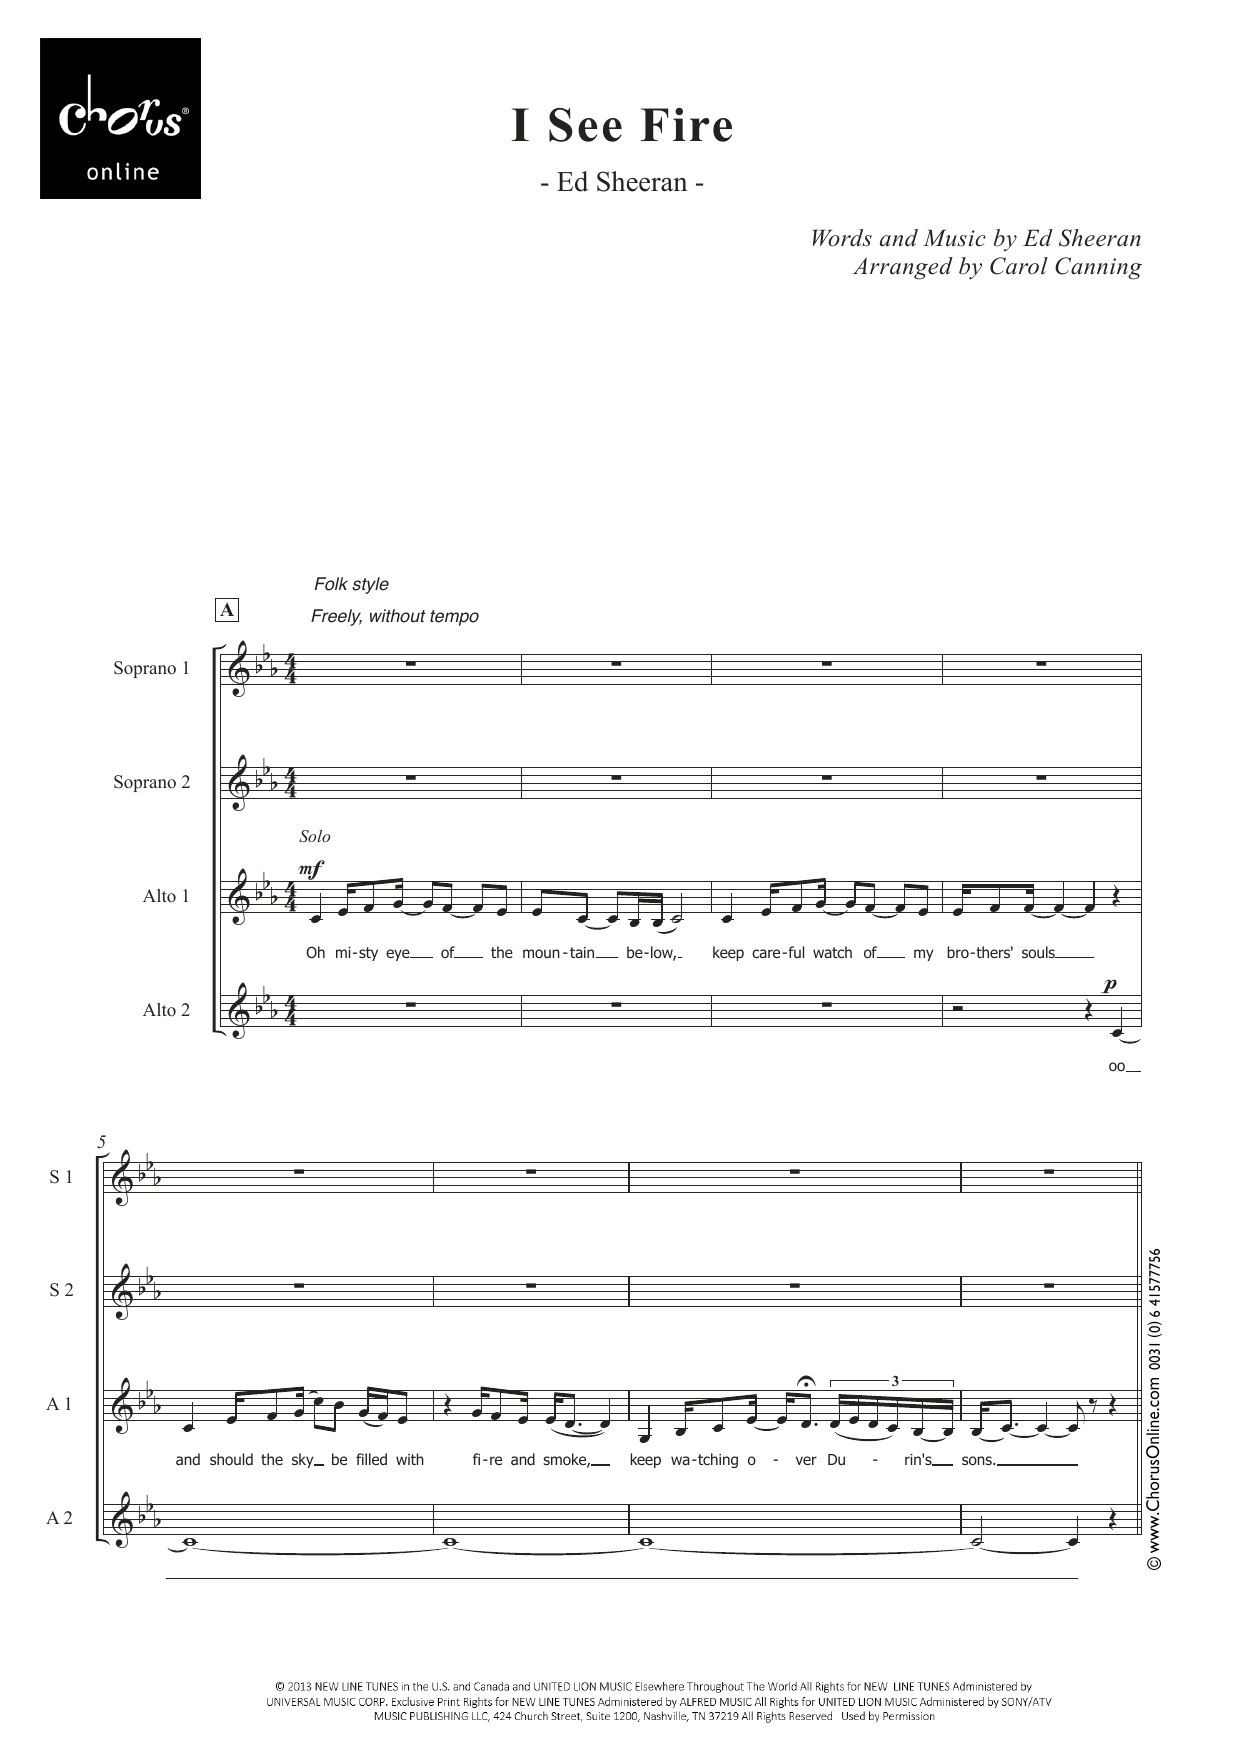 Ed Sheeran I See Fire (arr. Carol Canning) sheet music notes printable PDF score